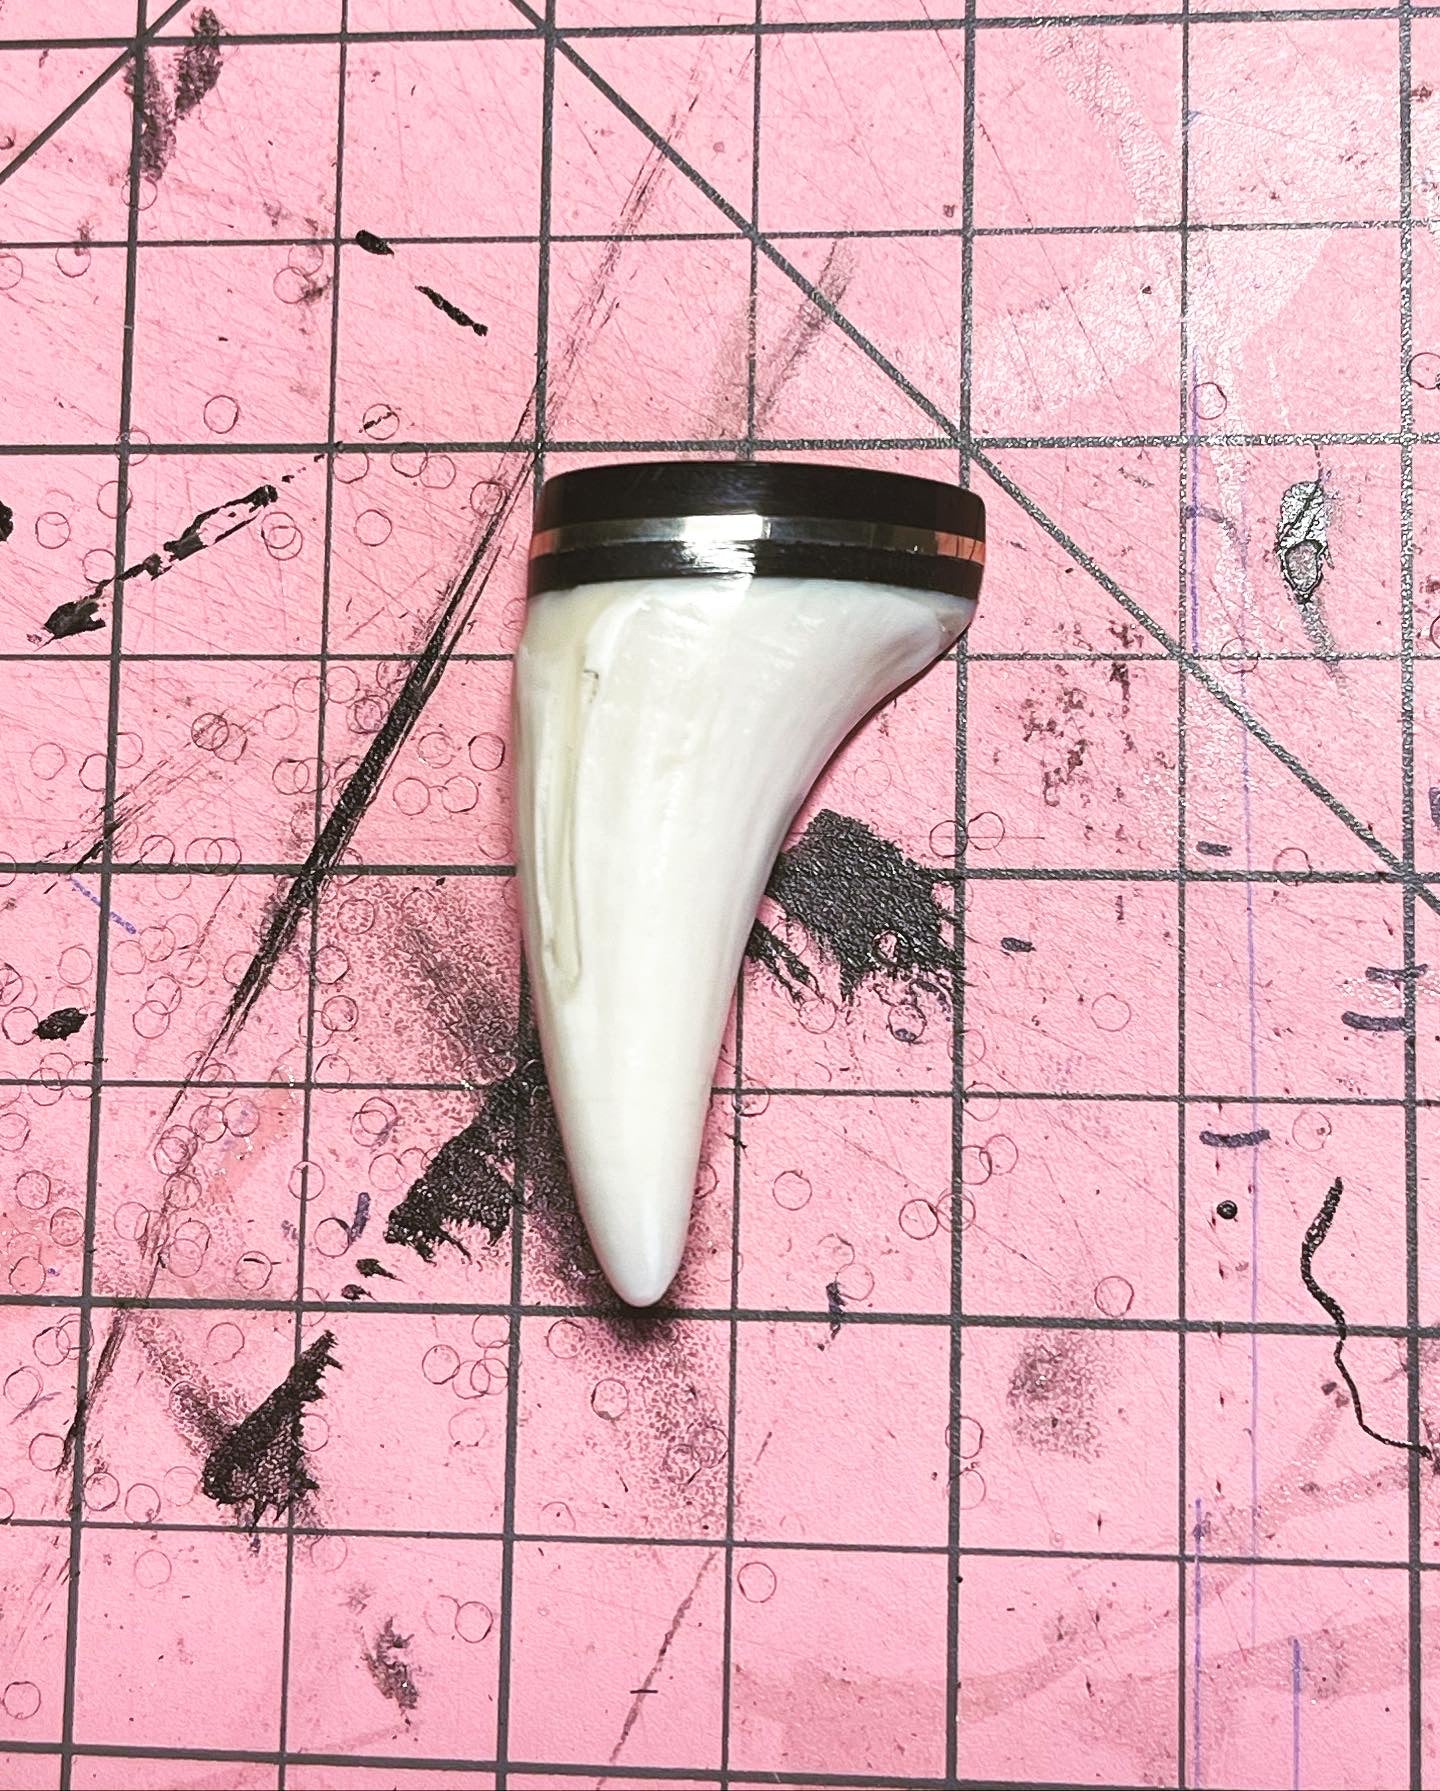 Nanuq/Polar Bear K9 Tooth Lapel Pin